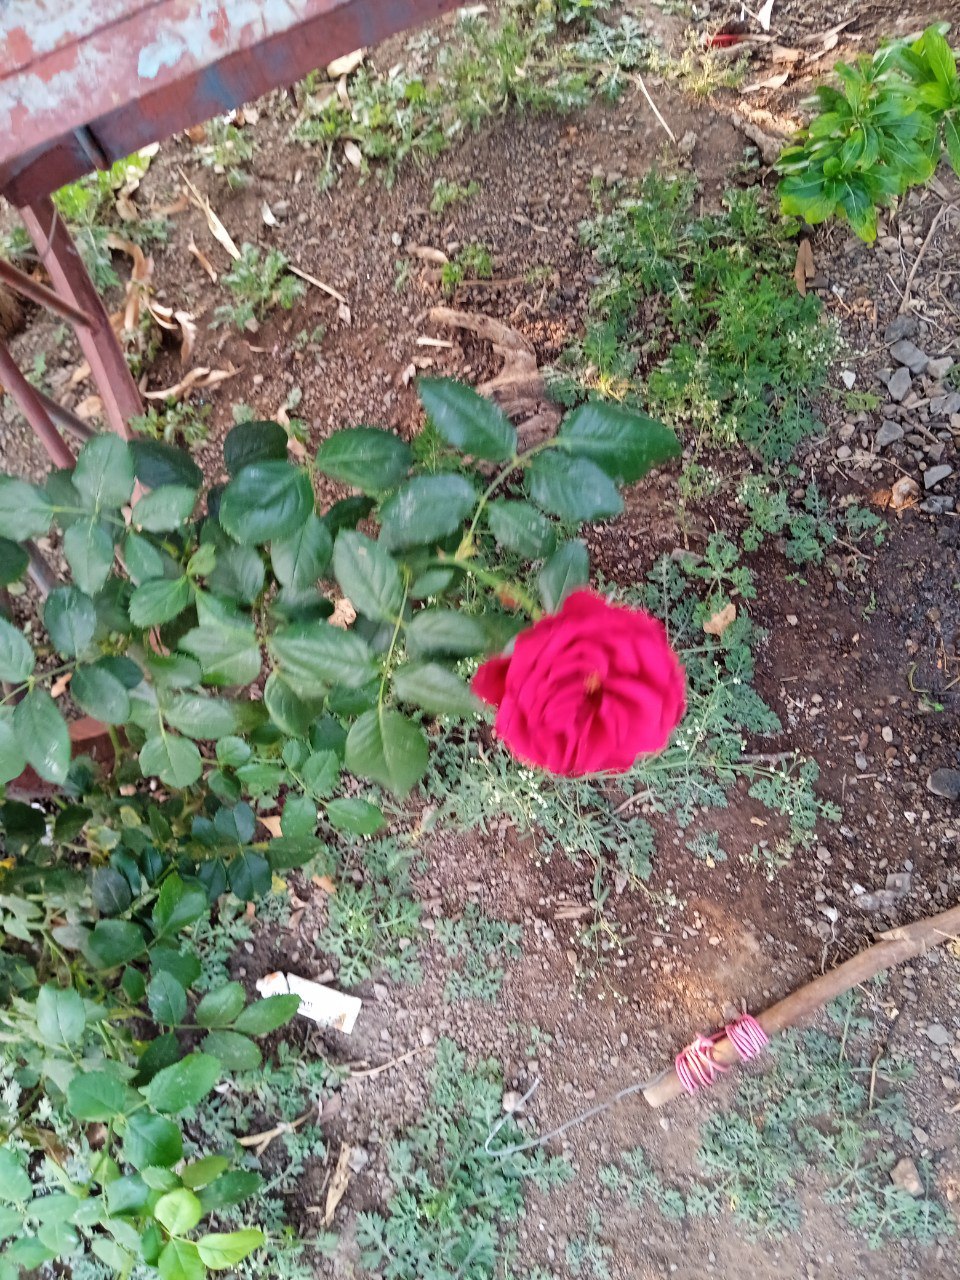 a rose in a garden